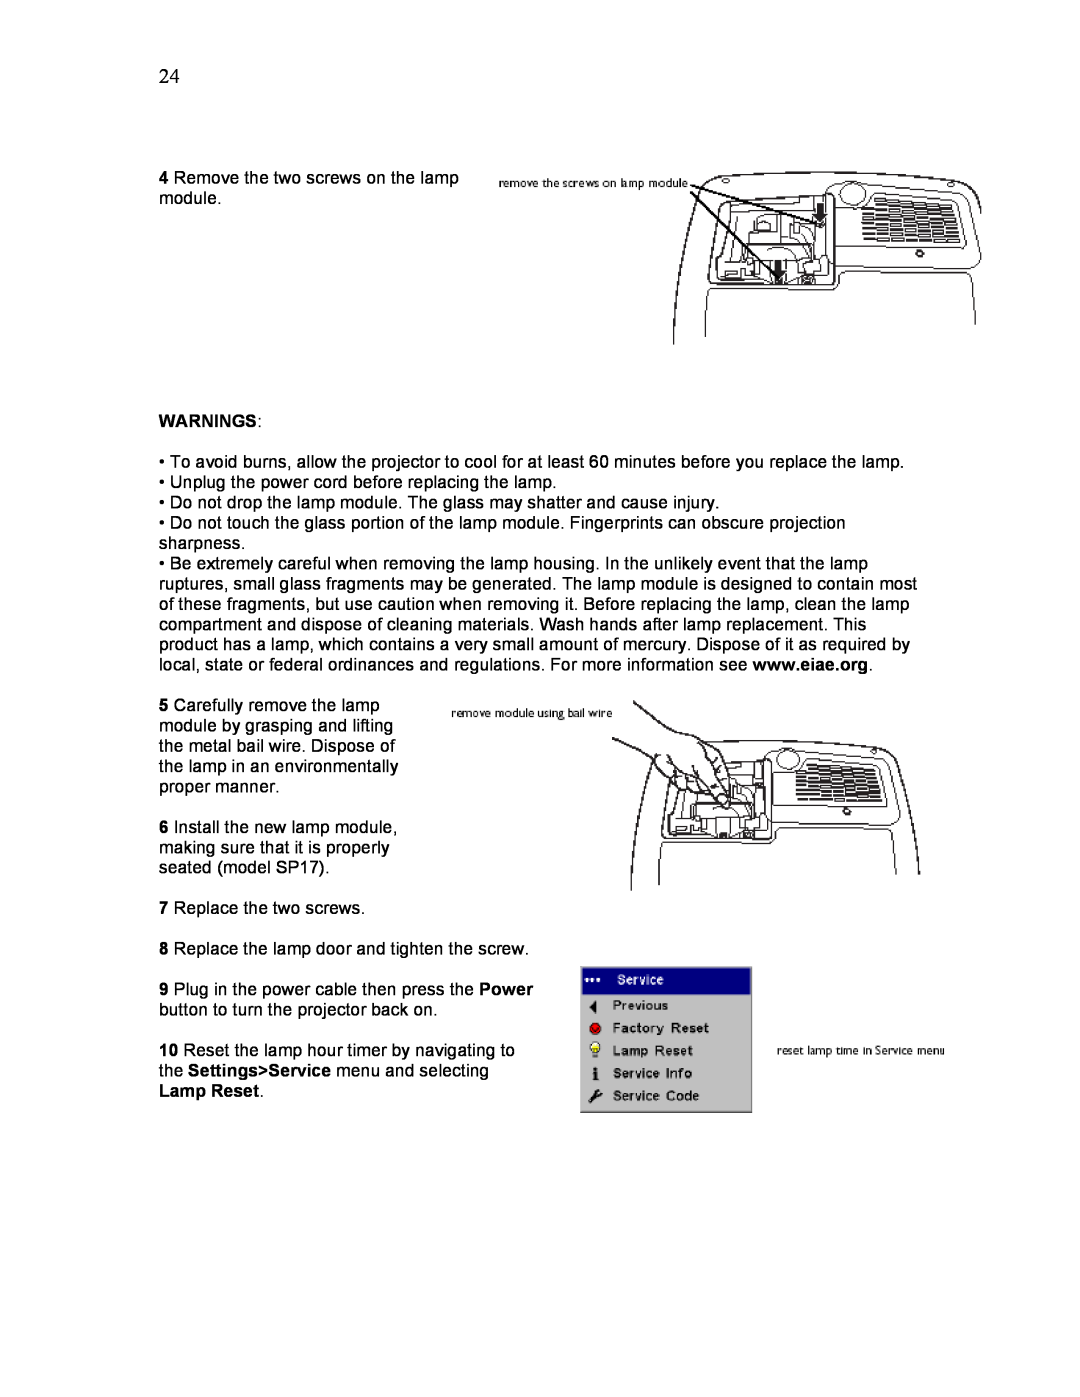 Knoll Systems HD225 user manual Warnings 